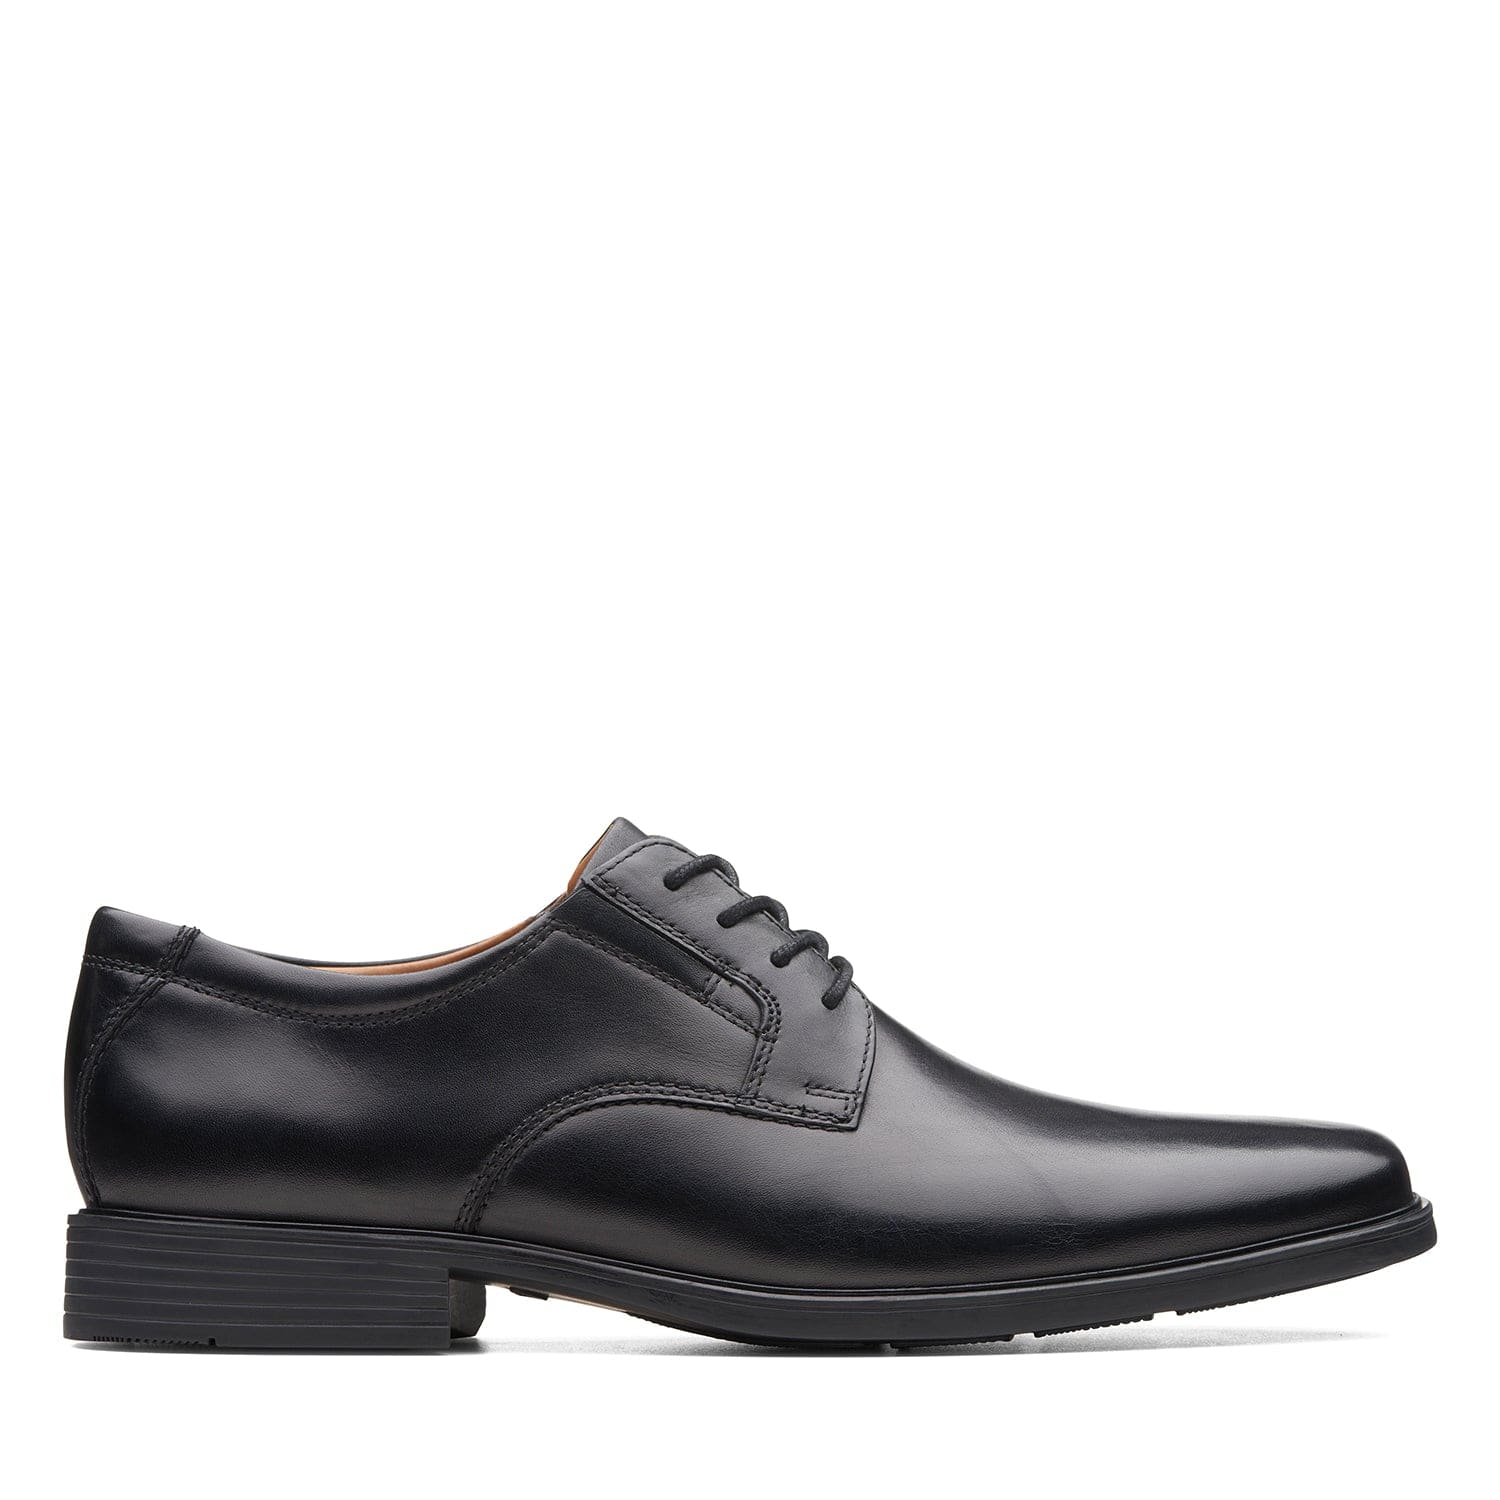 Clarks Tilden Plain - Shoes - Black Leather - 261103508 - H Width (Wide Fit)